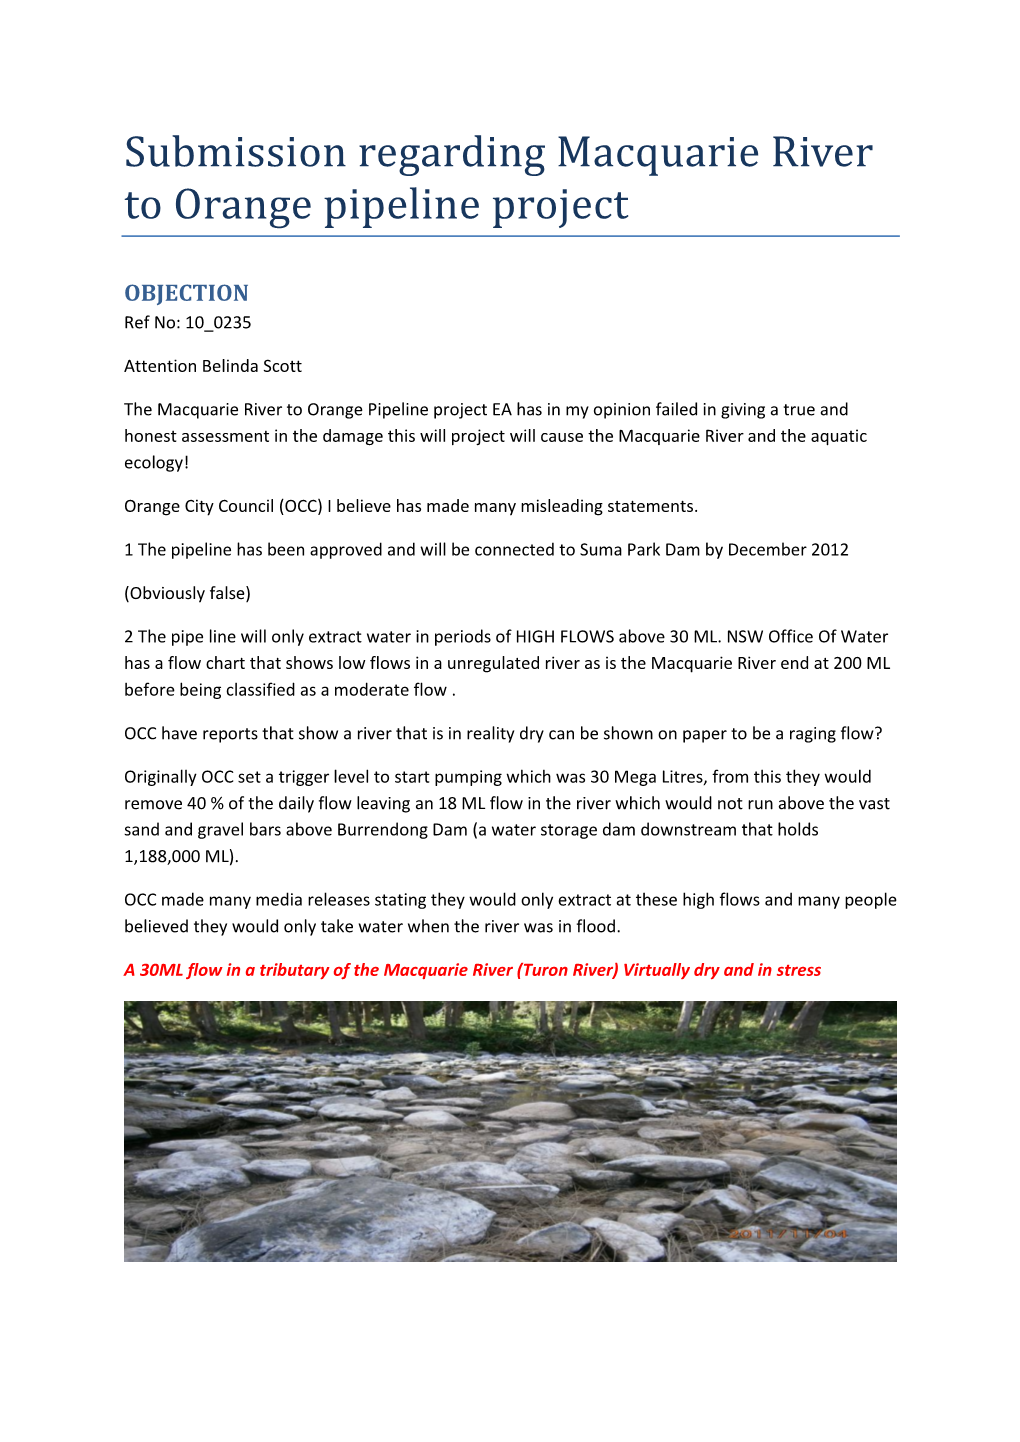 Submission Regarding Macquarie River to Orange Pipeline Project